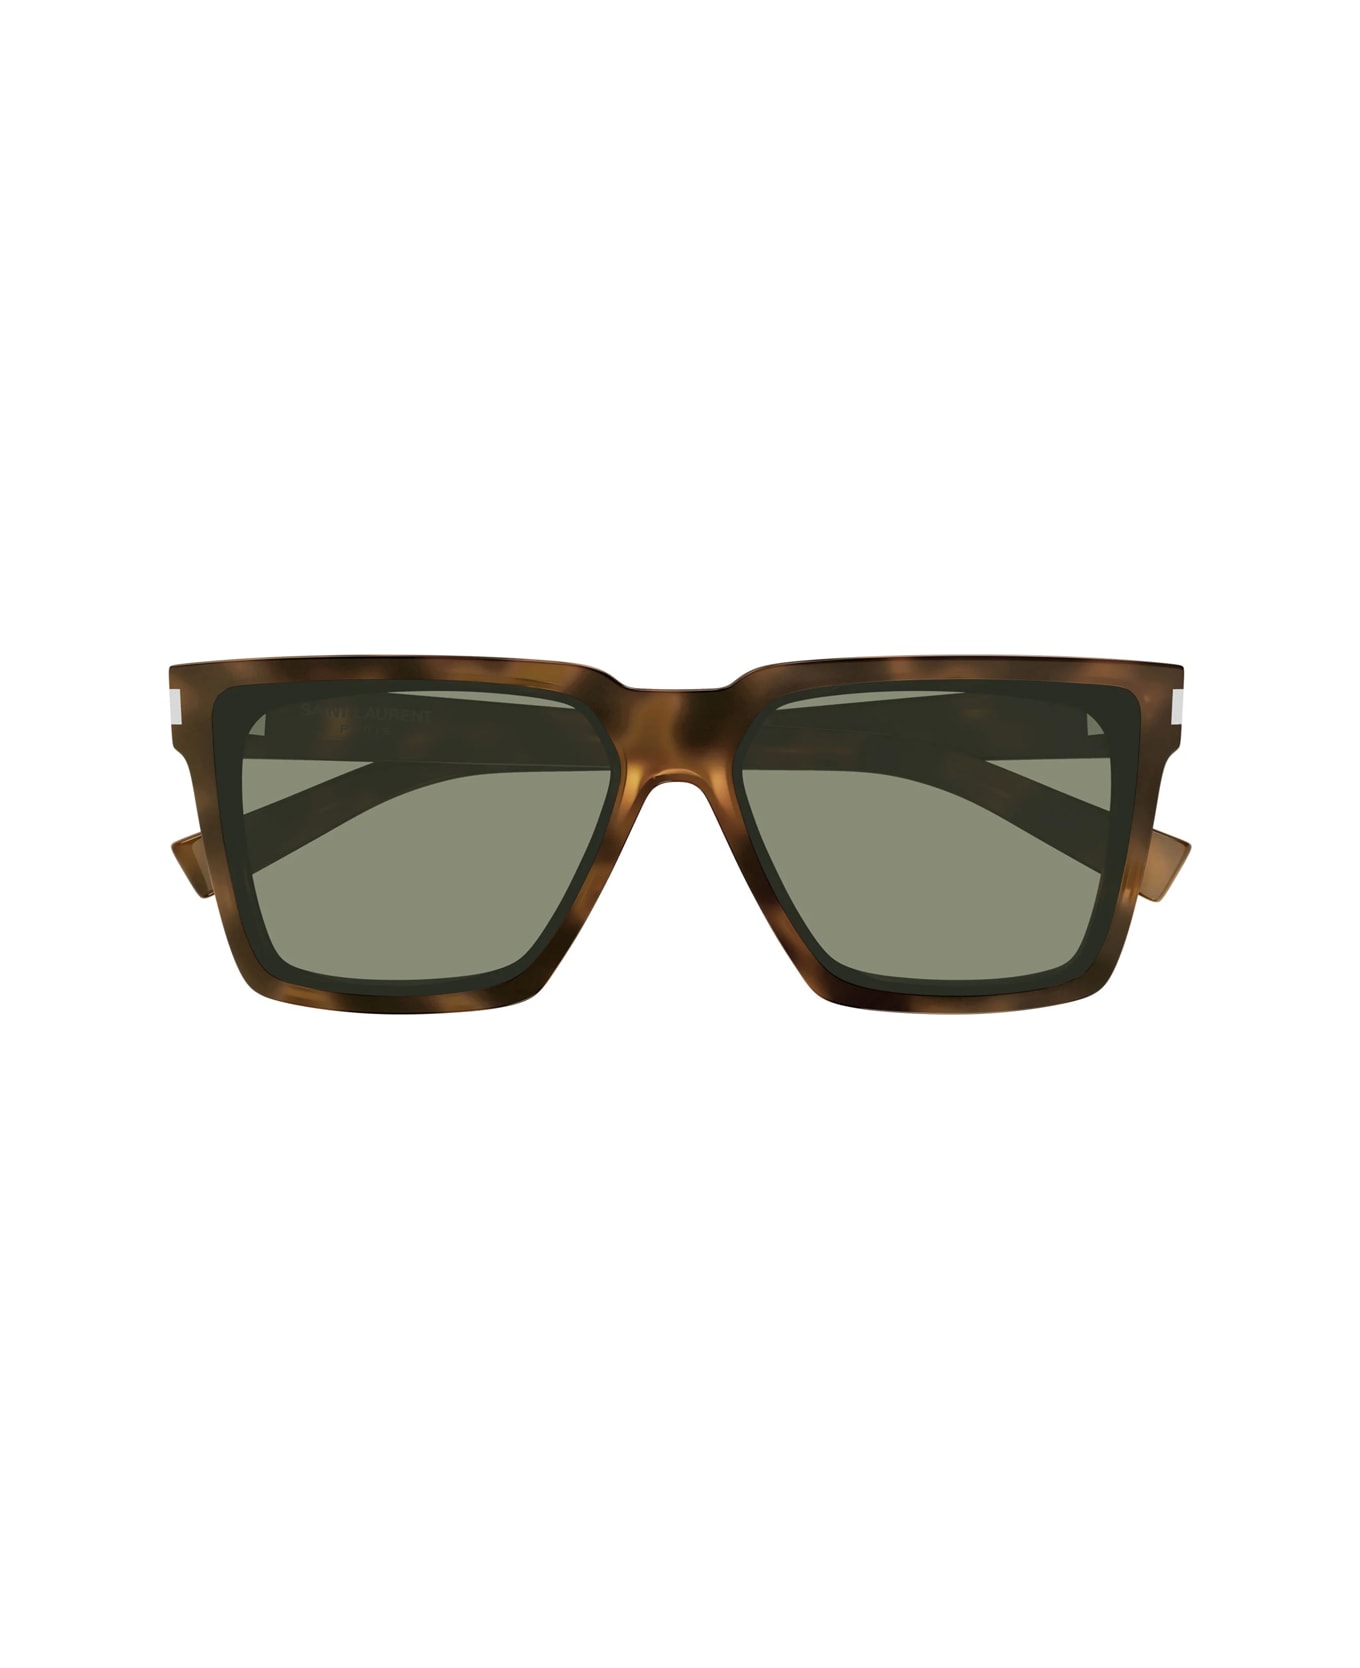 Saint Laurent Eyewear Sl 610 003 COMO Sunglasses - Marrone